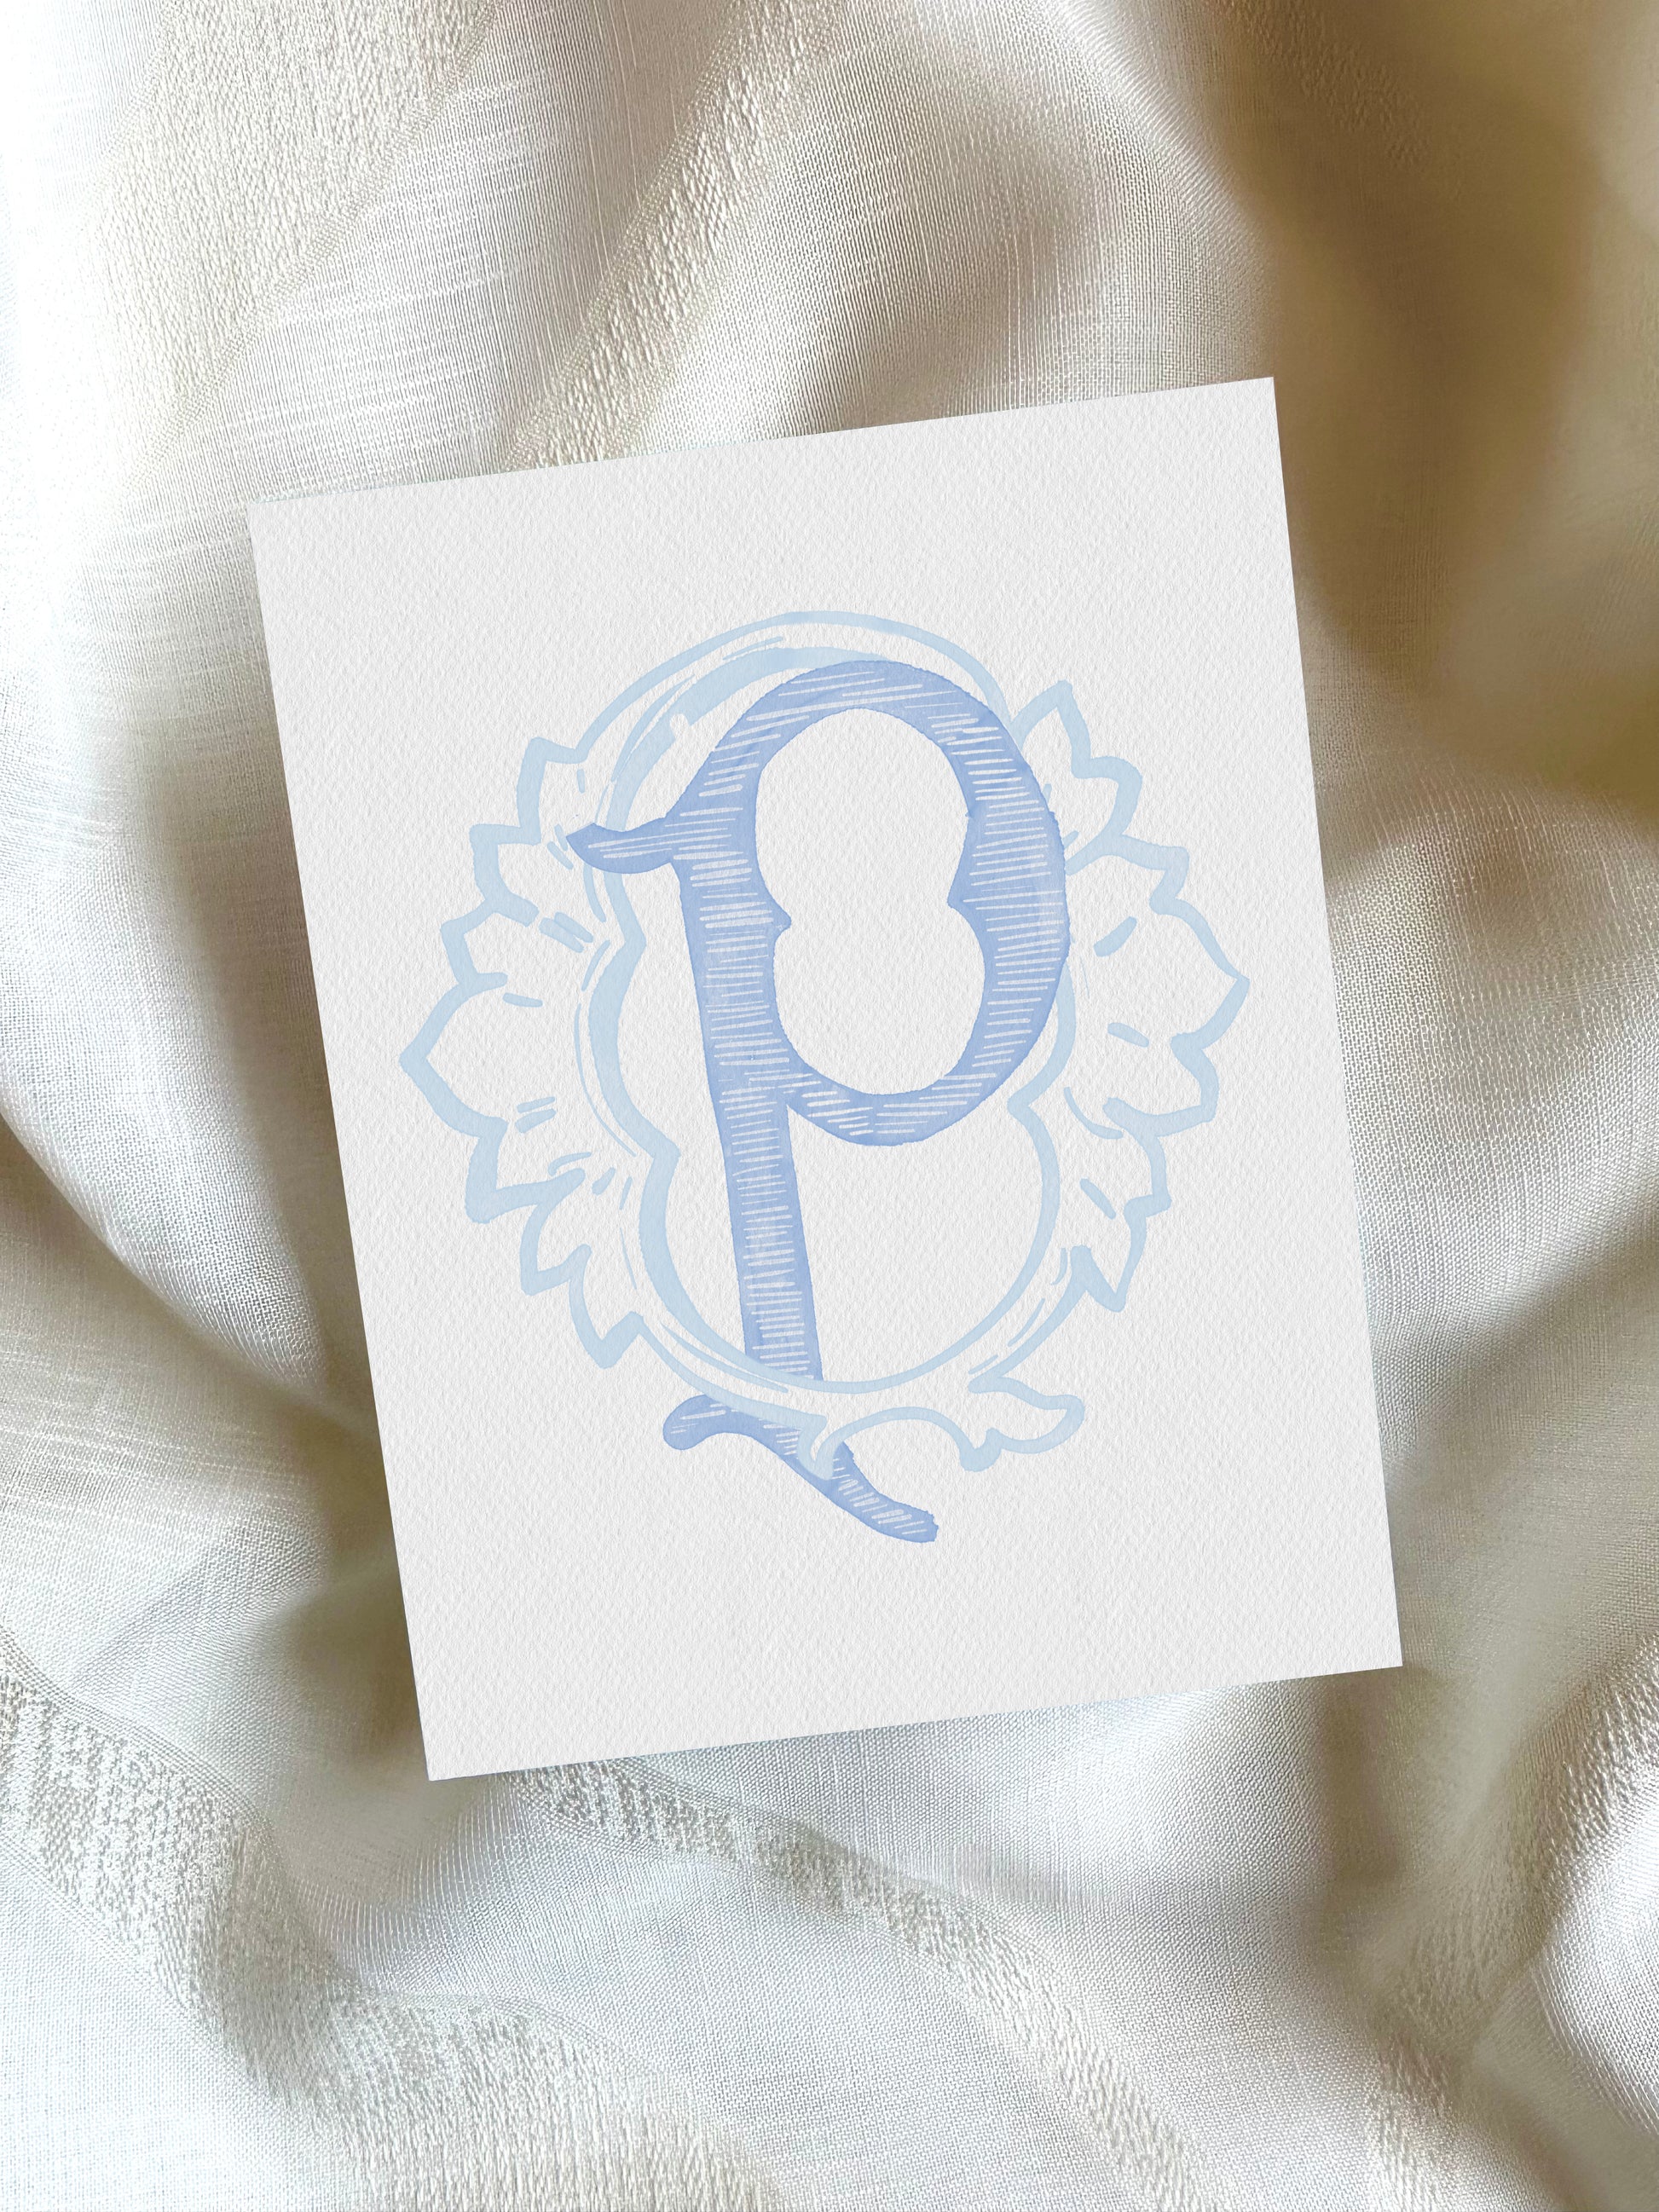 2 Letter Monogram with Letters PQ QP | Digital Download - Wedding Monogram SVG, Personal Logo, Wedding Logo for Wedding Invitations The Wedding Crest Lab